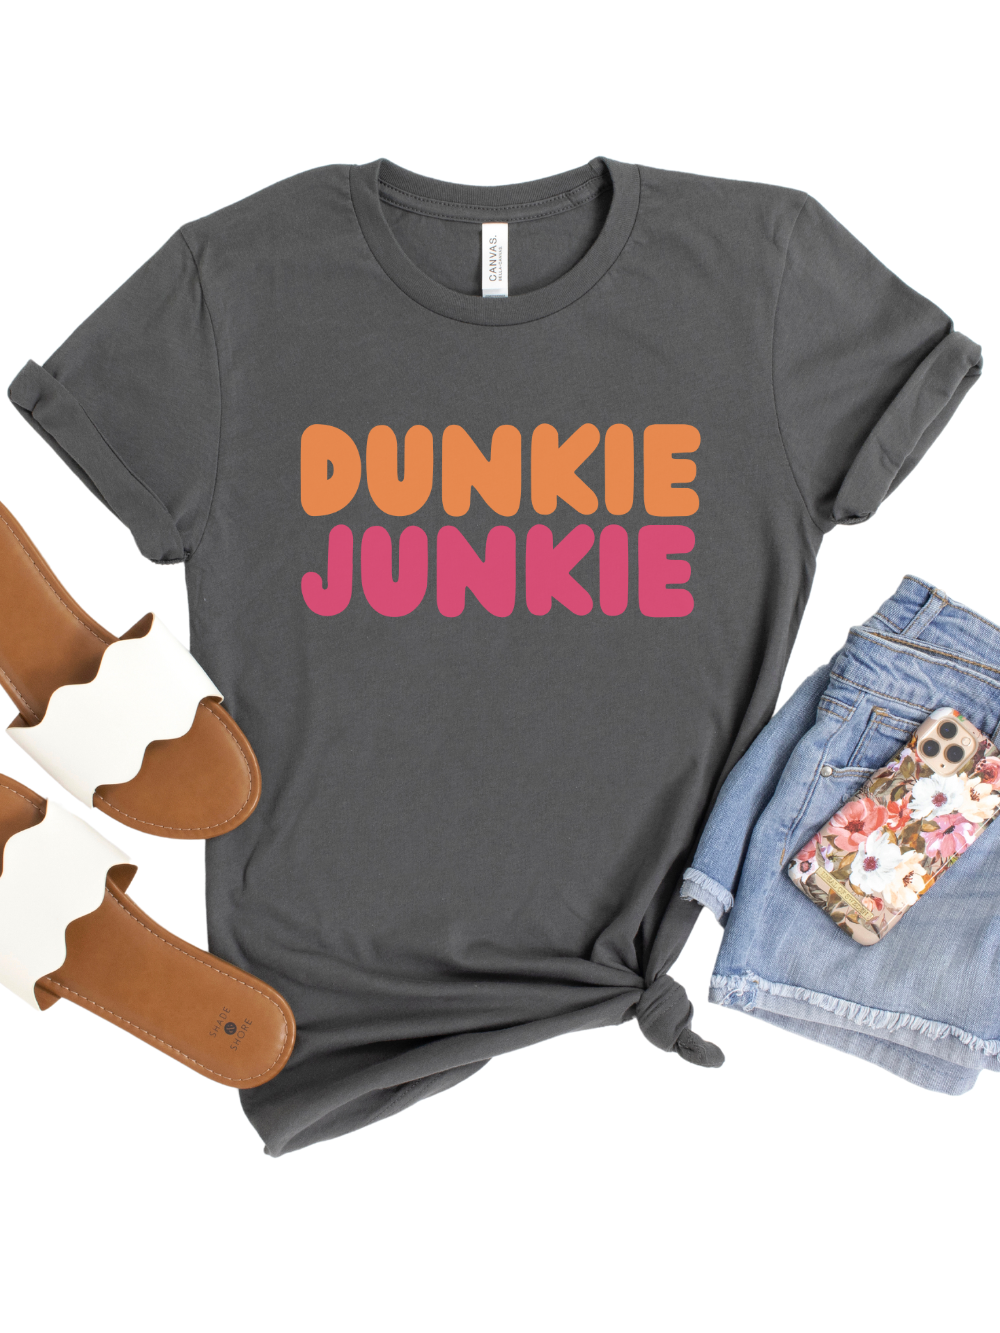 Dunkie Junkie Women's Short Sleeve Graphic T-Shirt - Sydney So Sweet